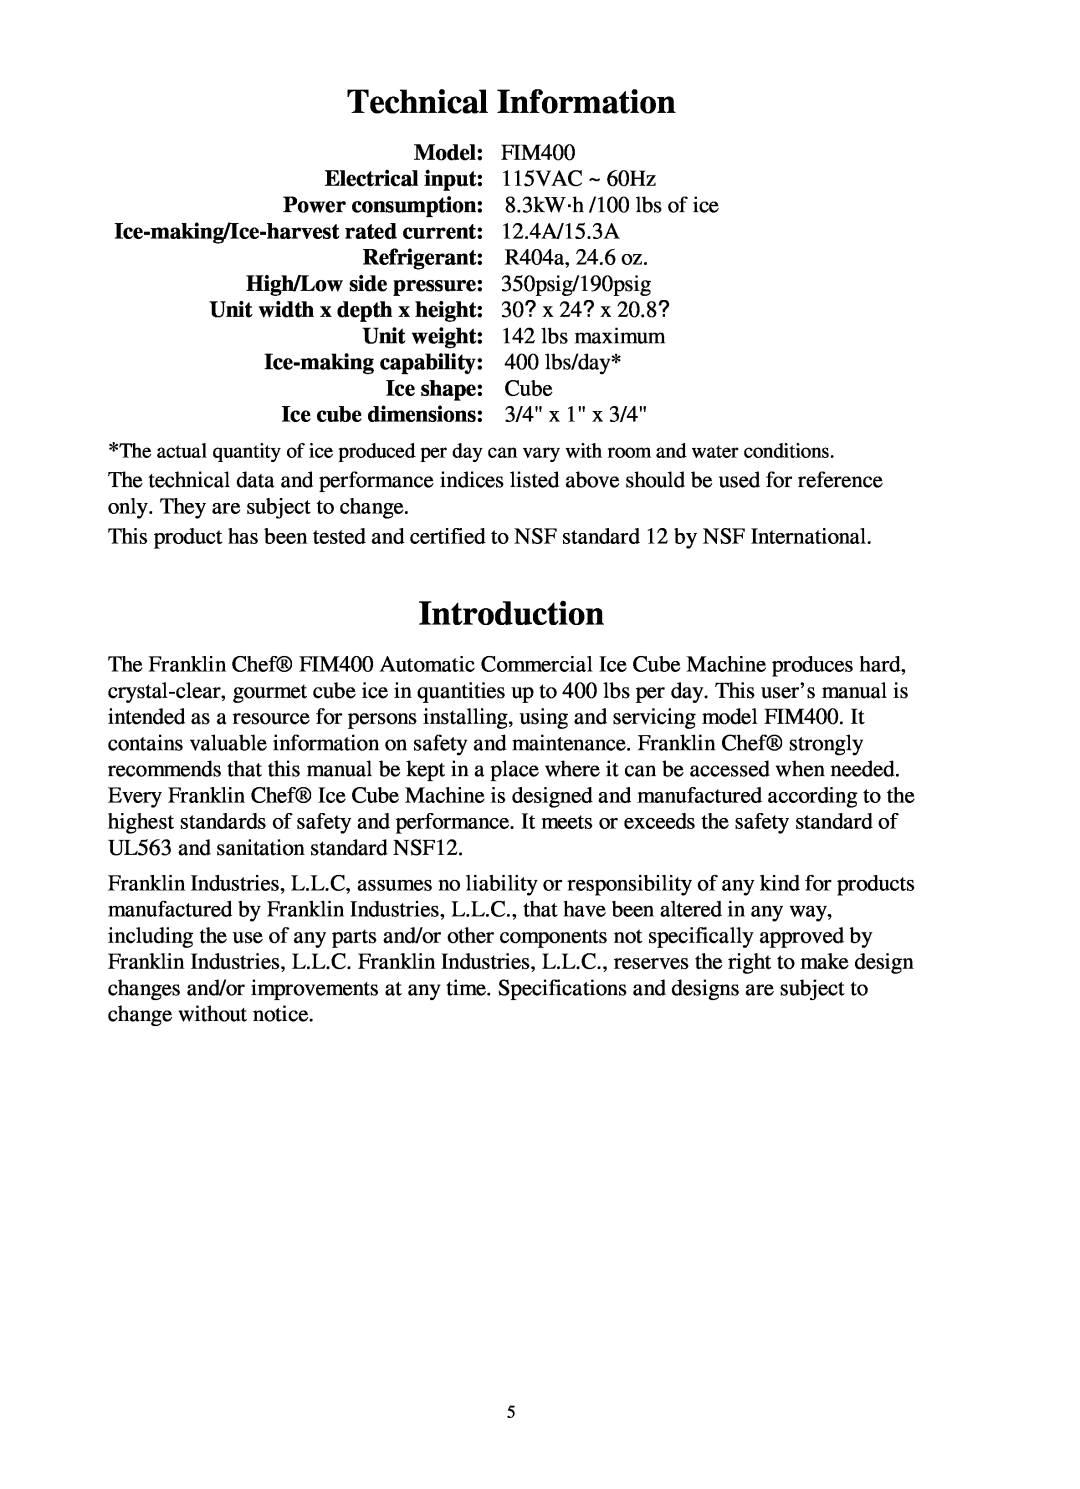 Franklin Industries, L.L.C FIM400 user manual Technical Information, Introduction 